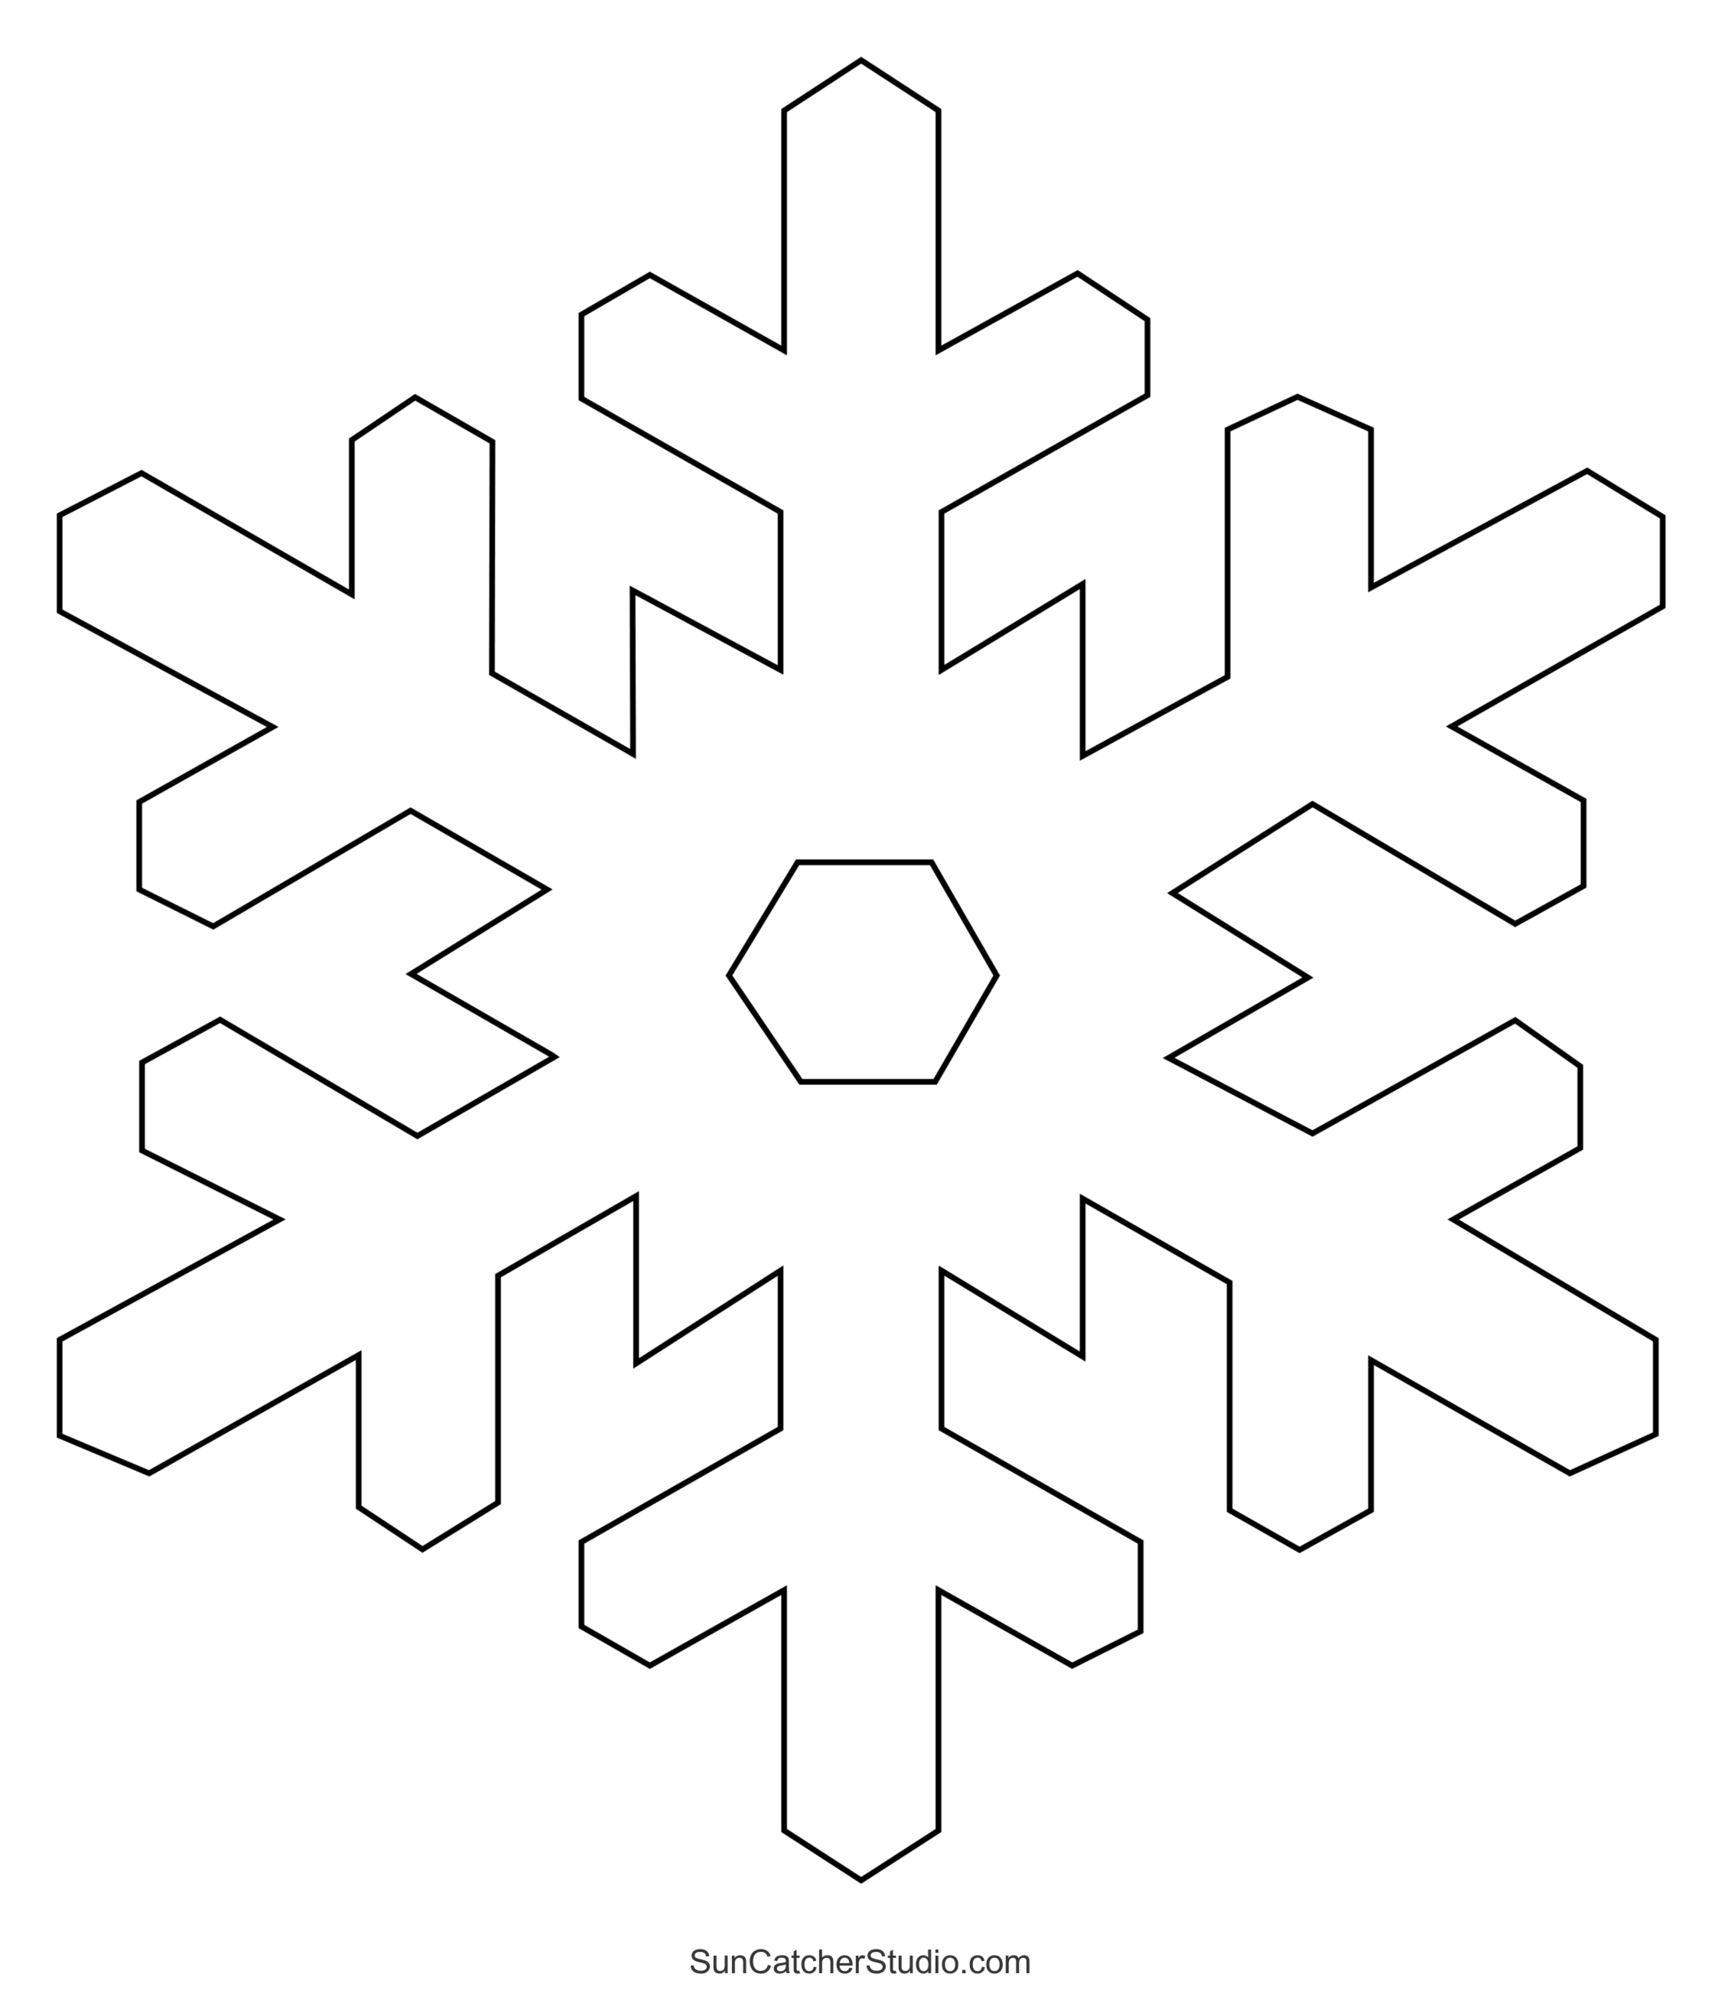 Snowflake Templates (Printable Stencils and Patterns) – DIY